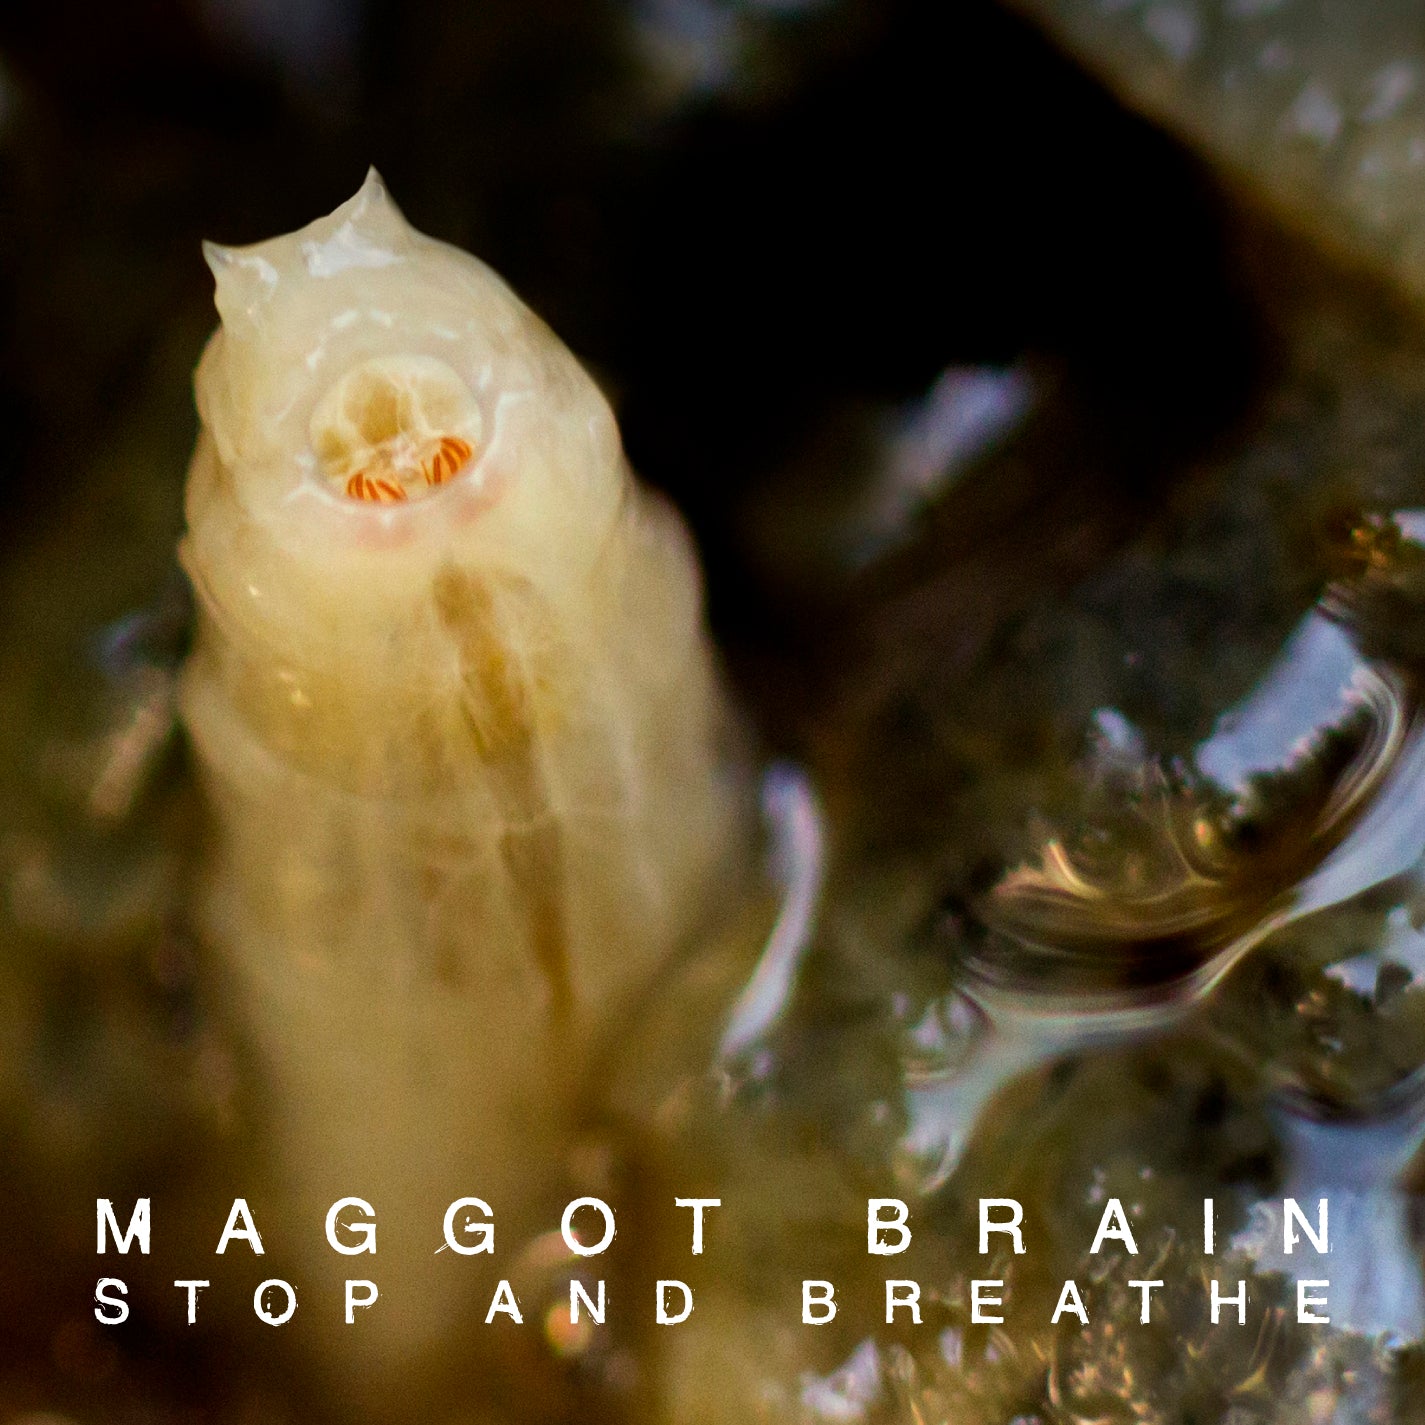 MAGGOT BRAIN "STOP AND BREATHE"